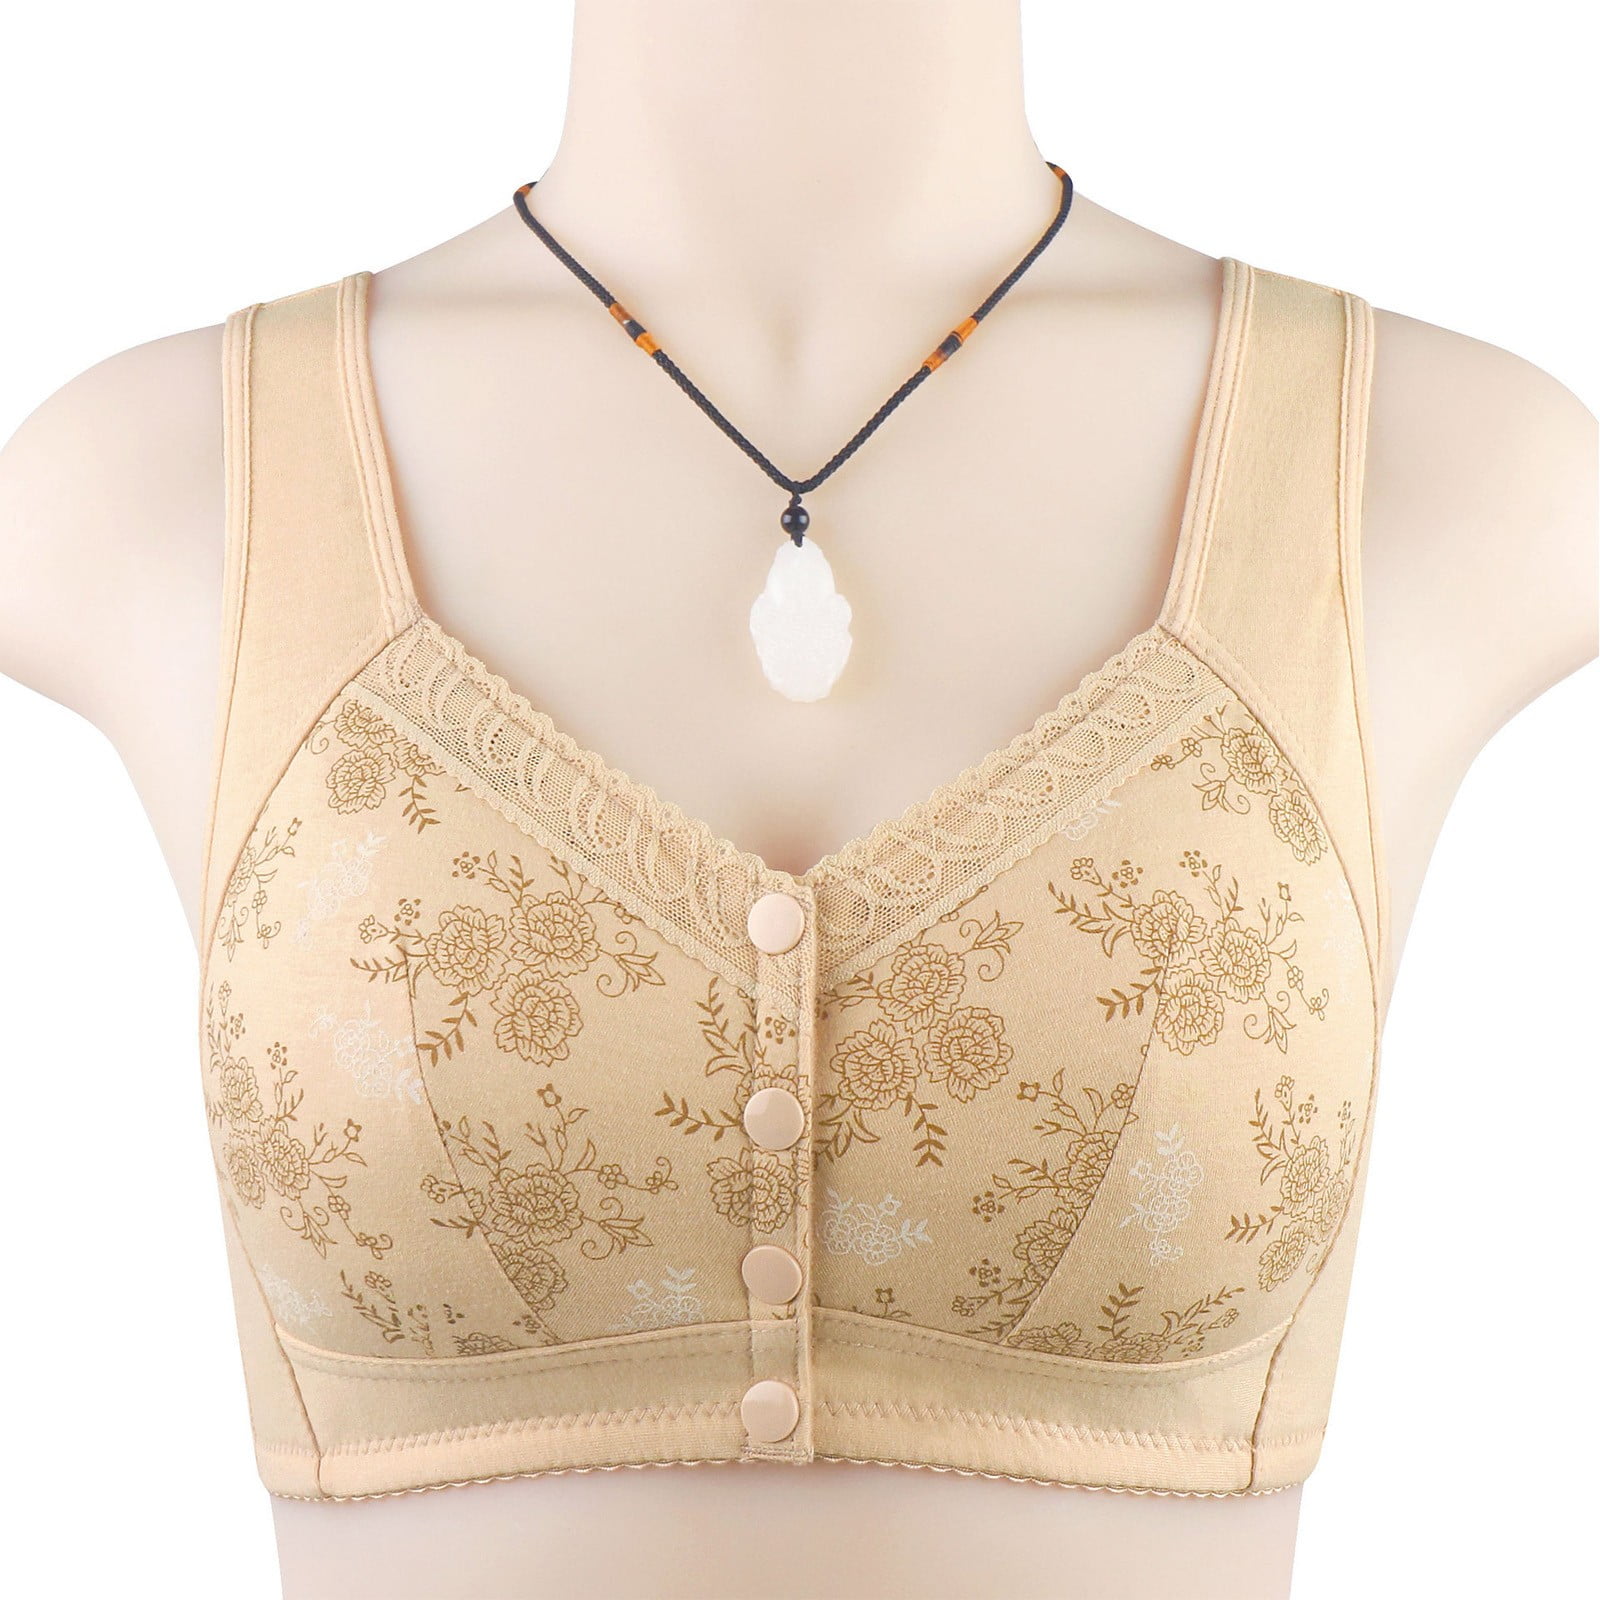 Naughtyhood Fashion bra Woman's Lace bra Plus Size bra sales today clearance